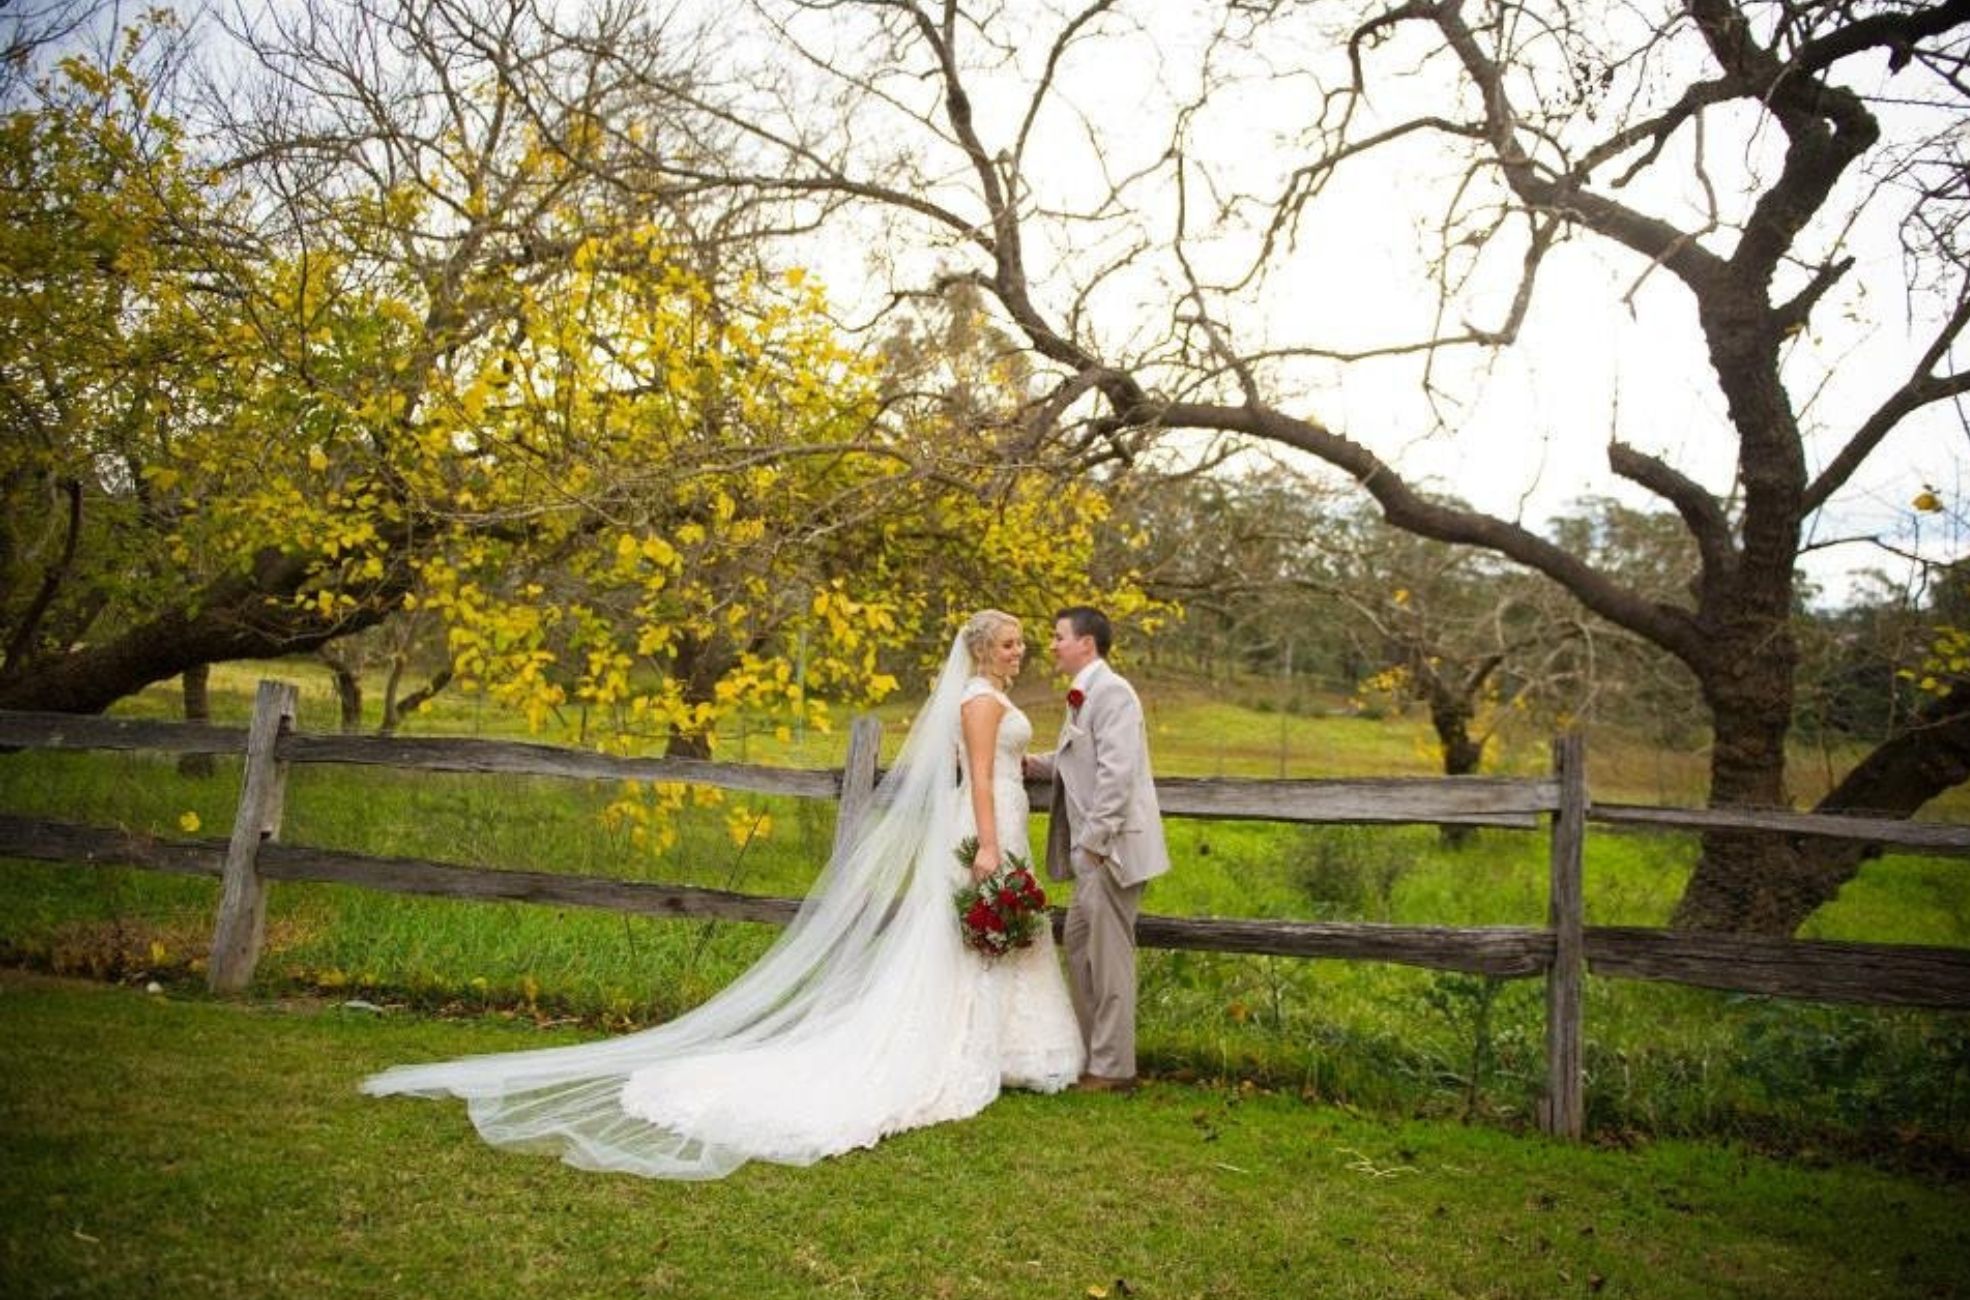 Belgenny Farm Wedding Venue In Sydney